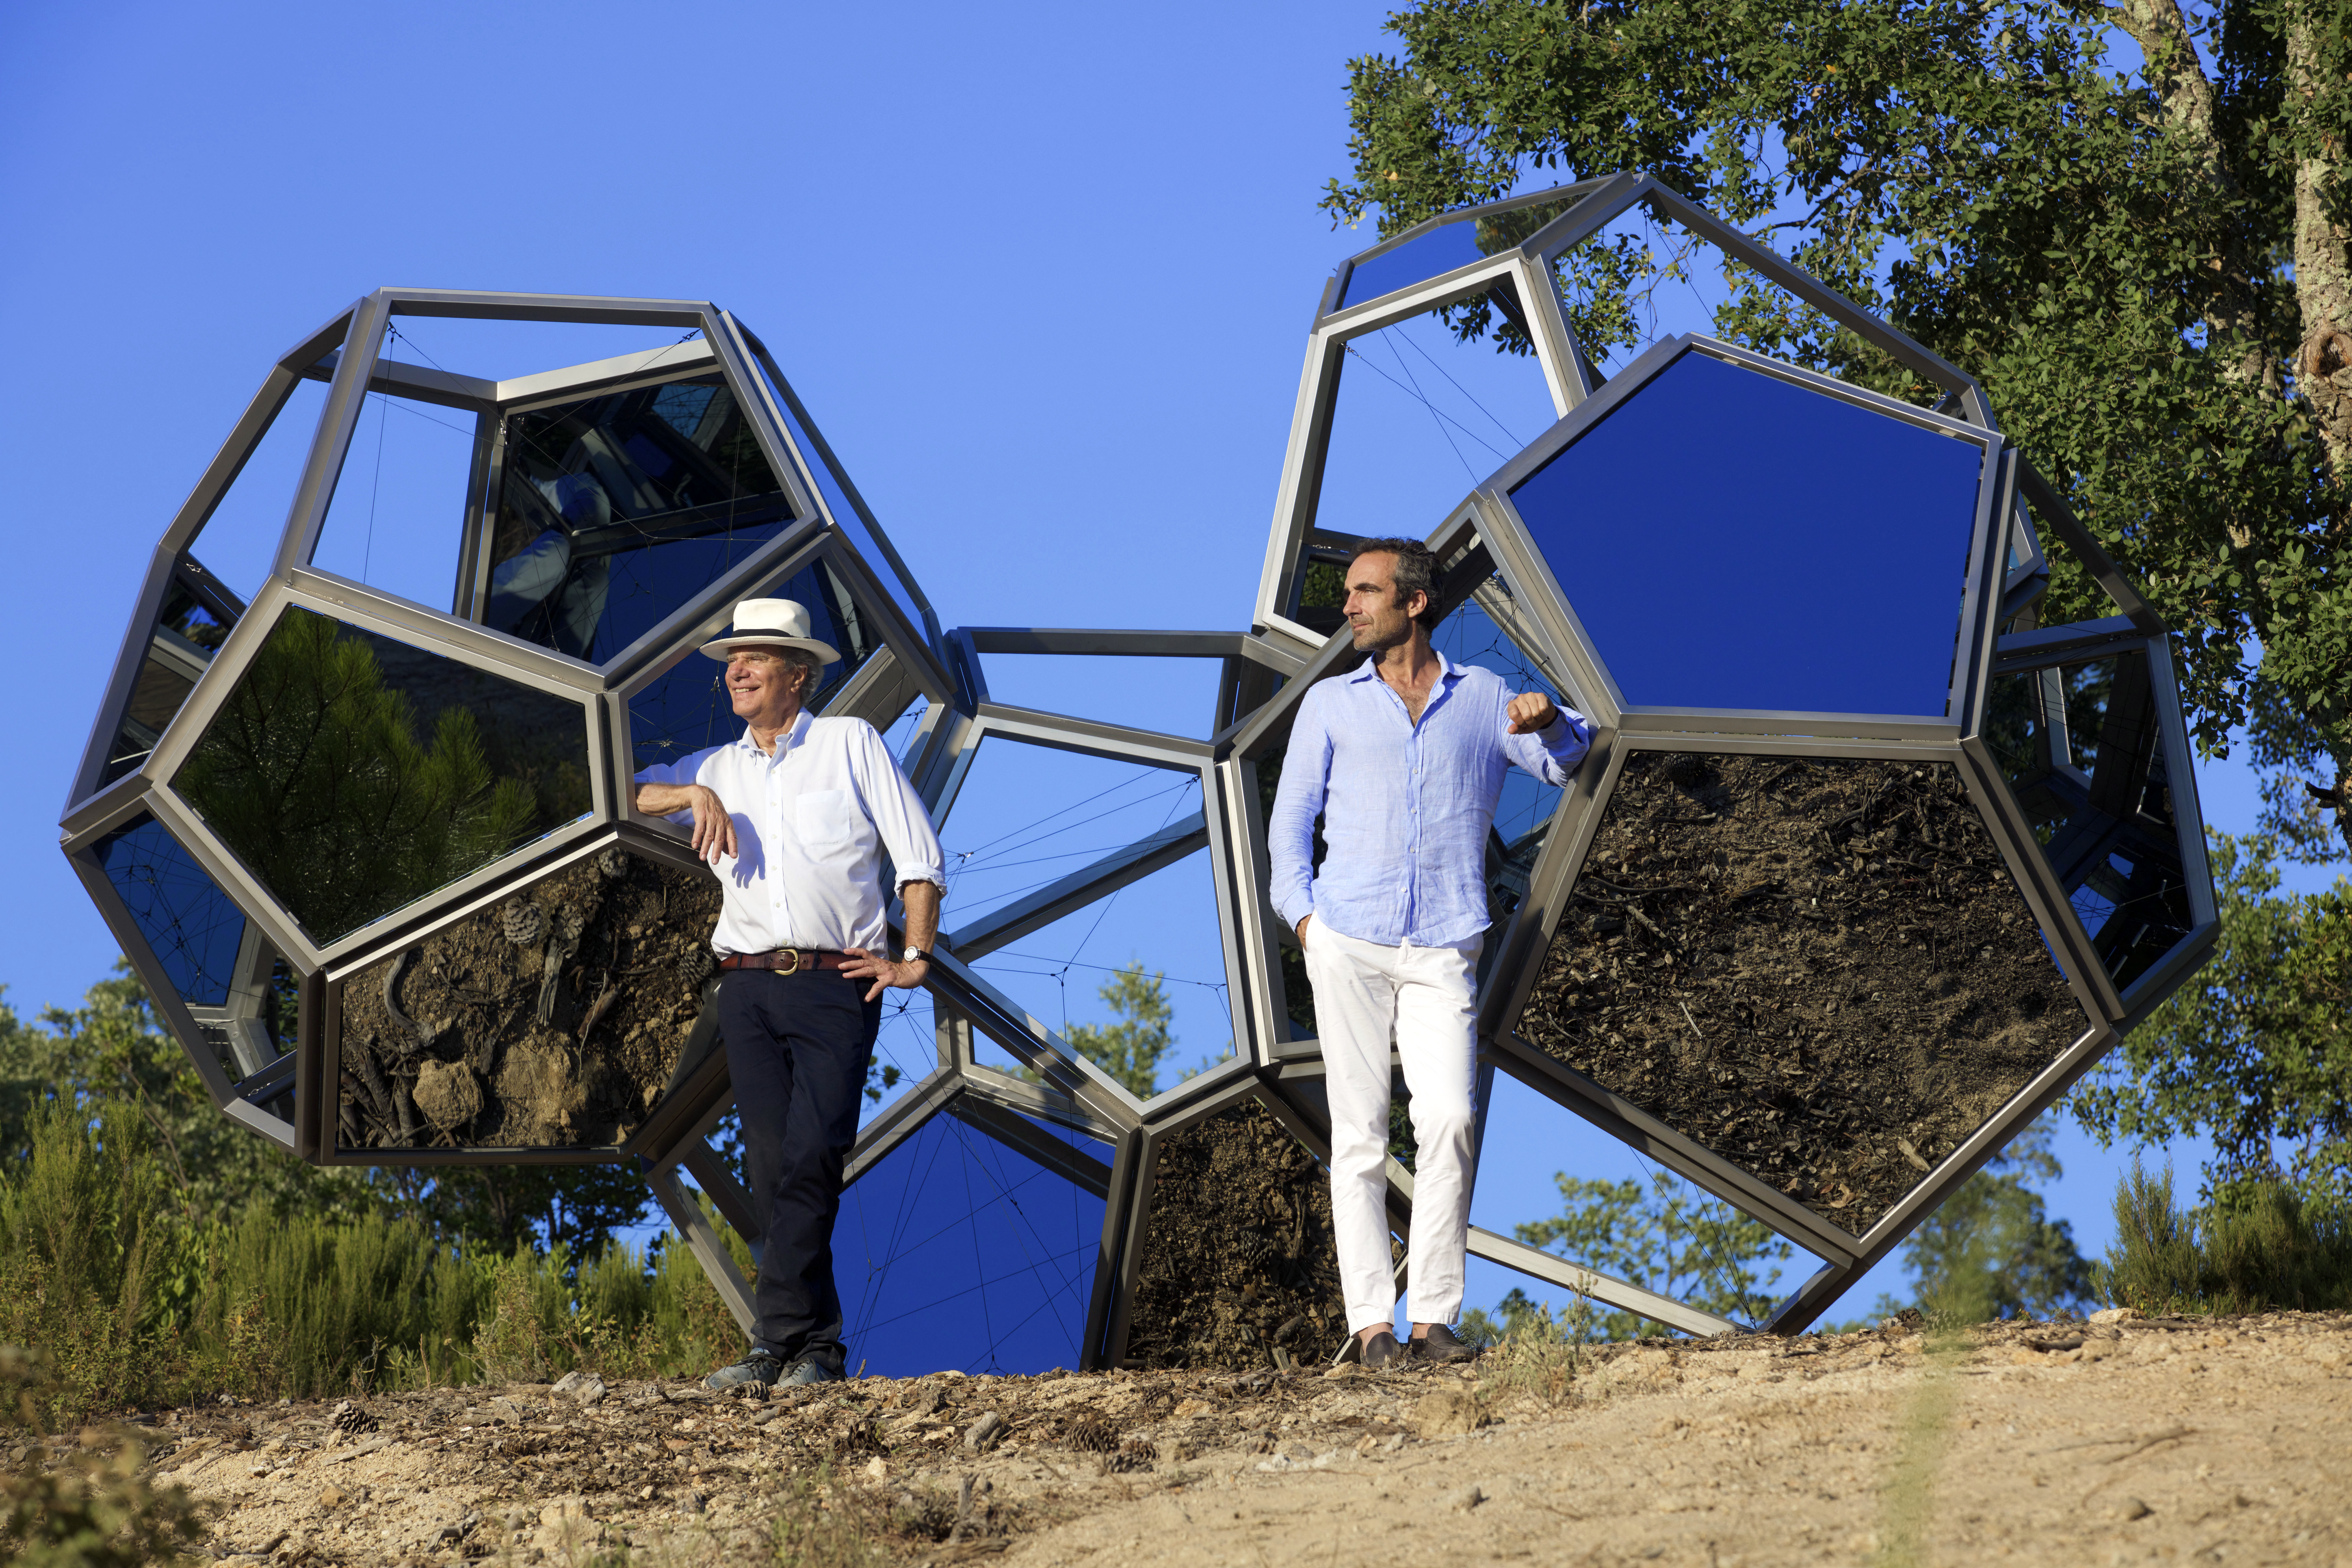 Jean-Gabriel and Edward Mitterrand with Tomás Saraceno’s <em>Air-Port-City/Cloud Cities 4 Modules Metal</em>, 2010.